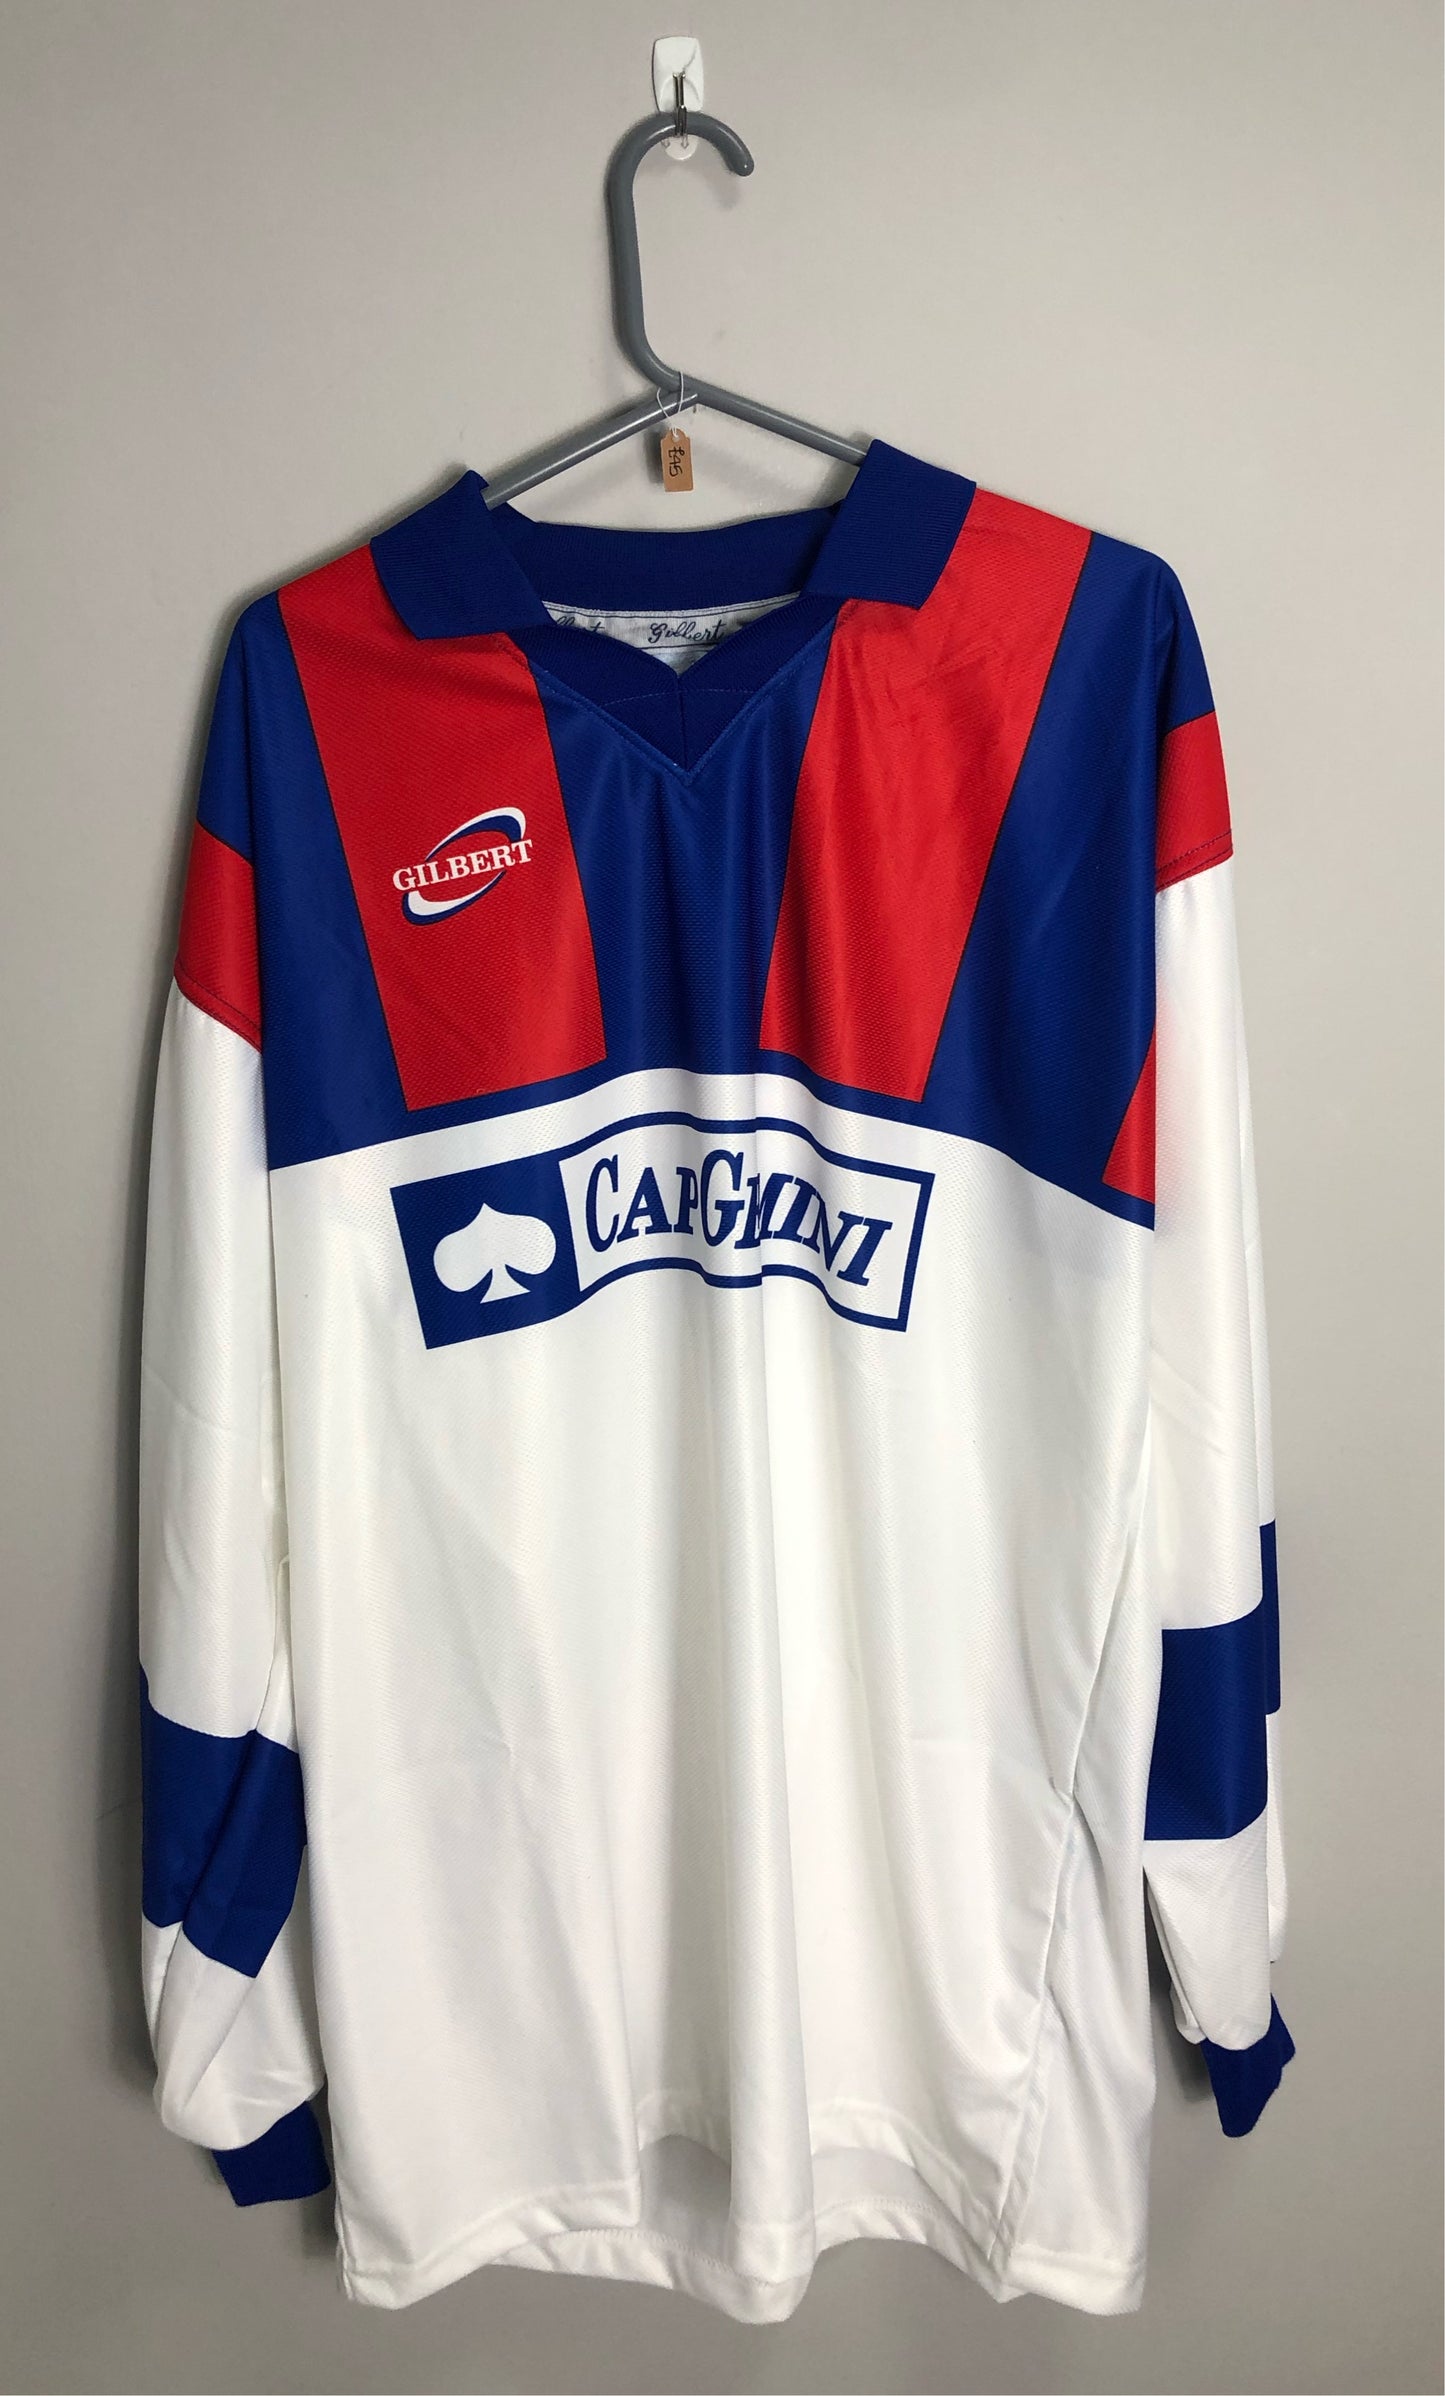 Grenoble 1998/1999 Away Shirt